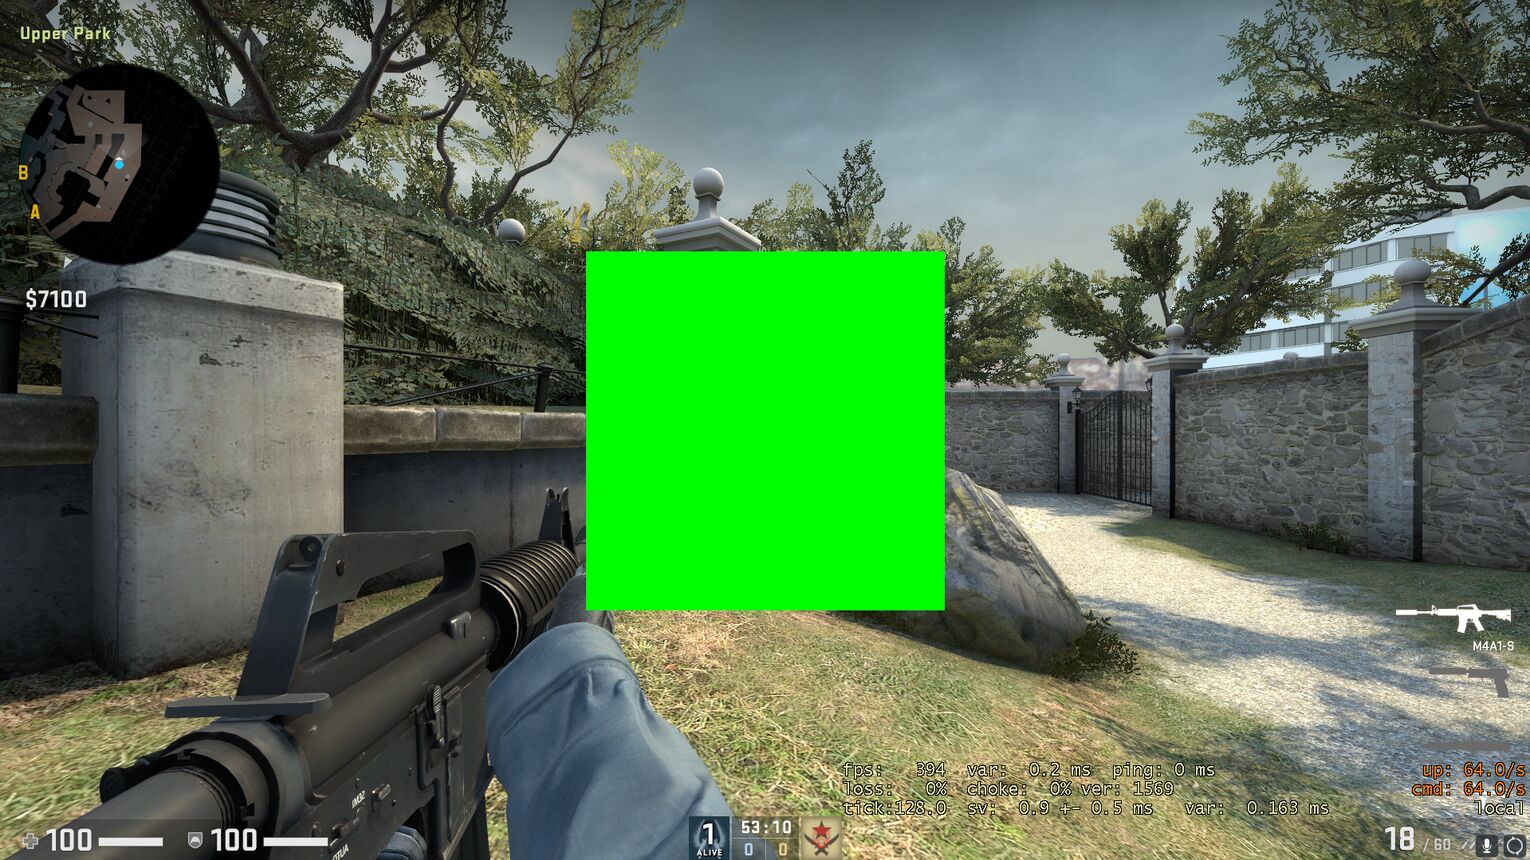 The Green Screen